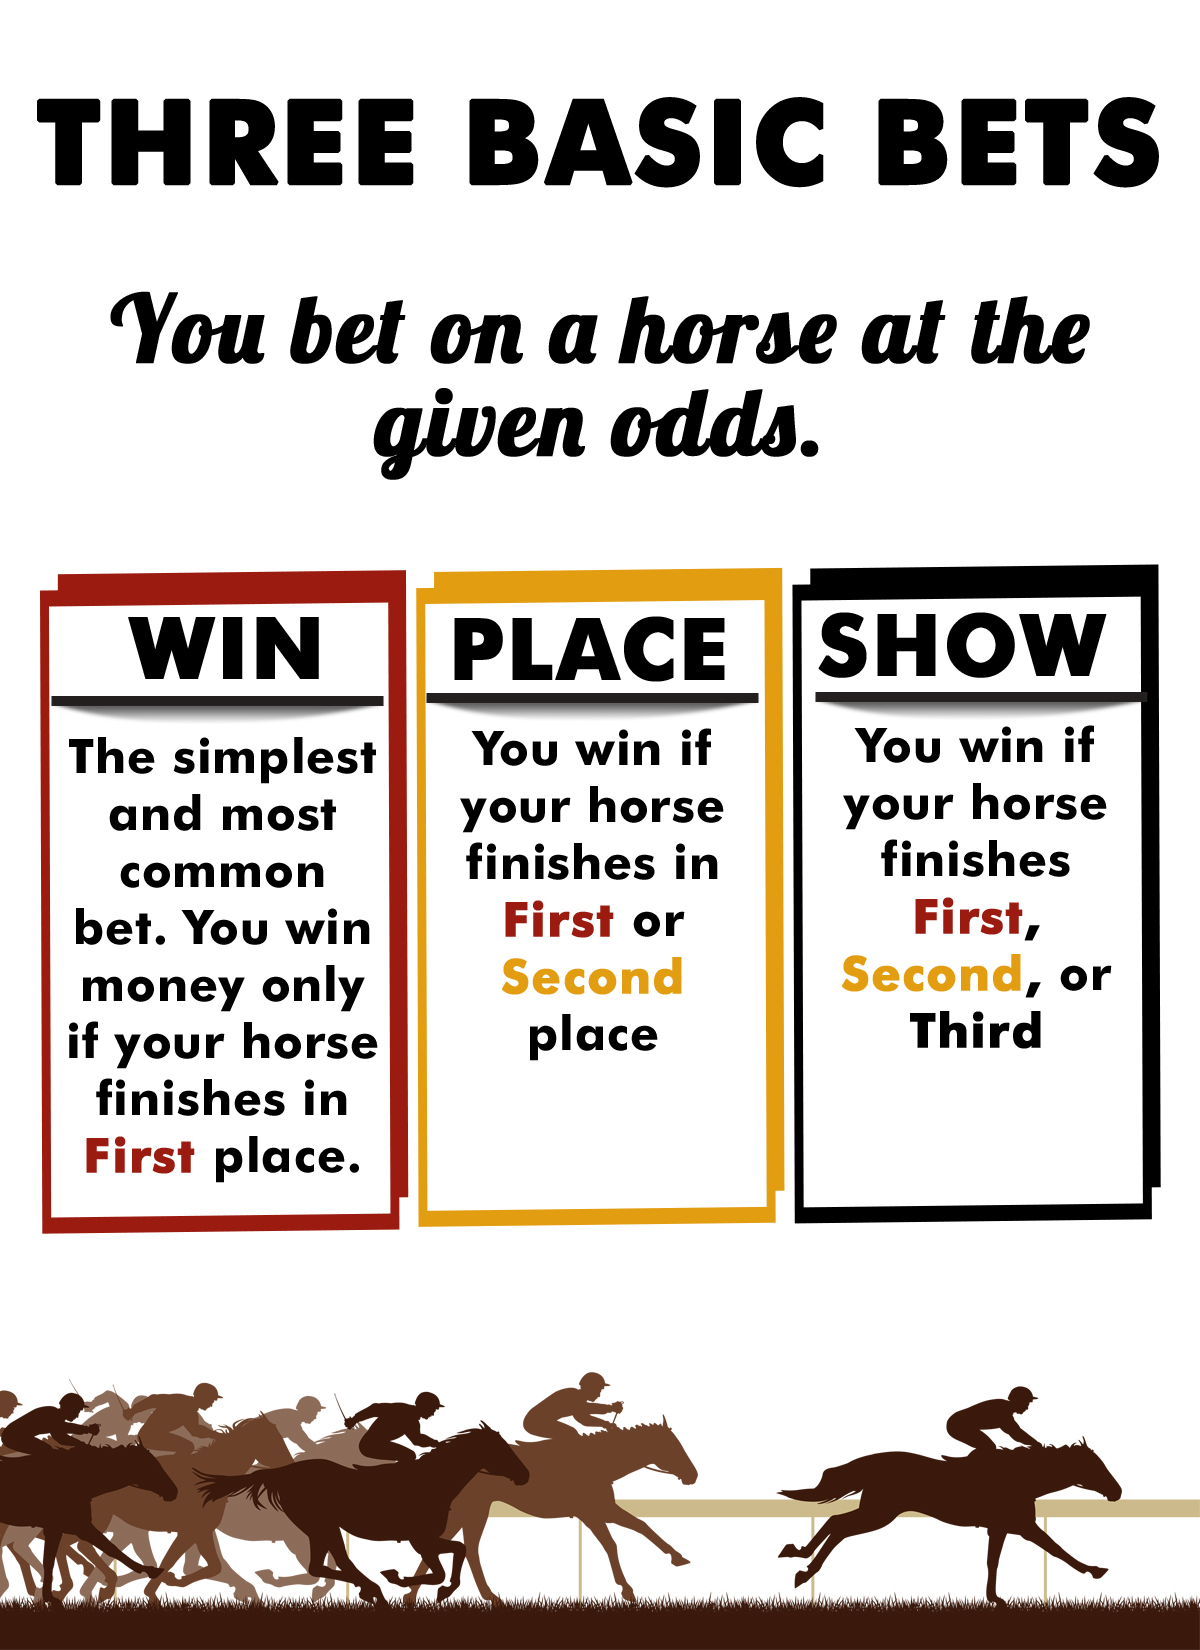 Horse race betting explained investing formulas future values of multiple cash